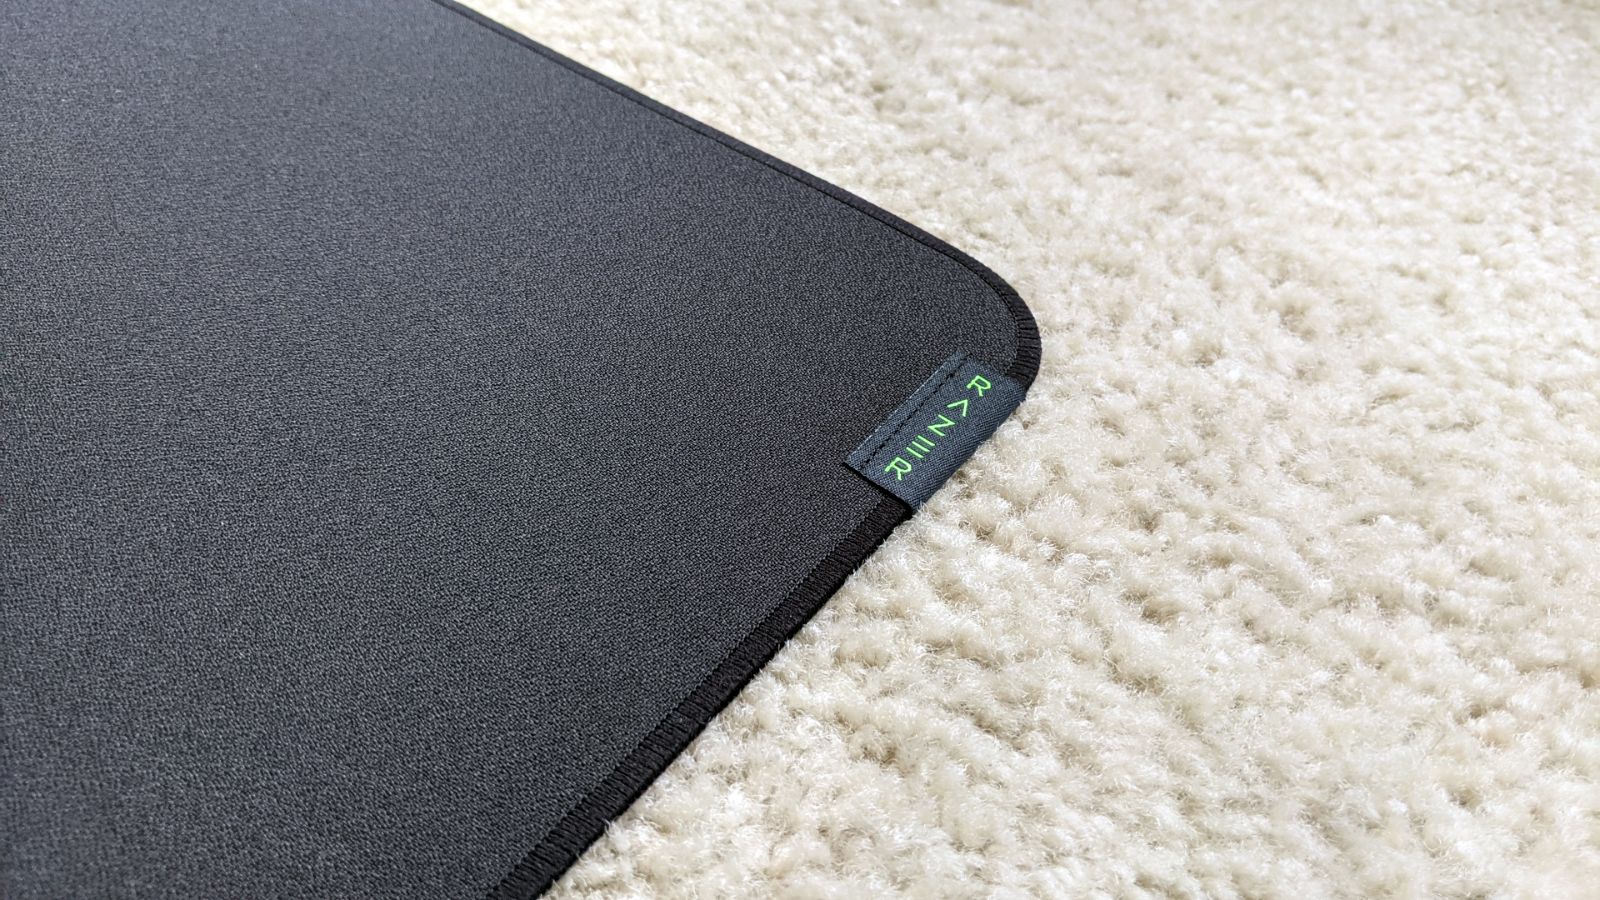 Close-up of Razer Strider mousepad stitched edge